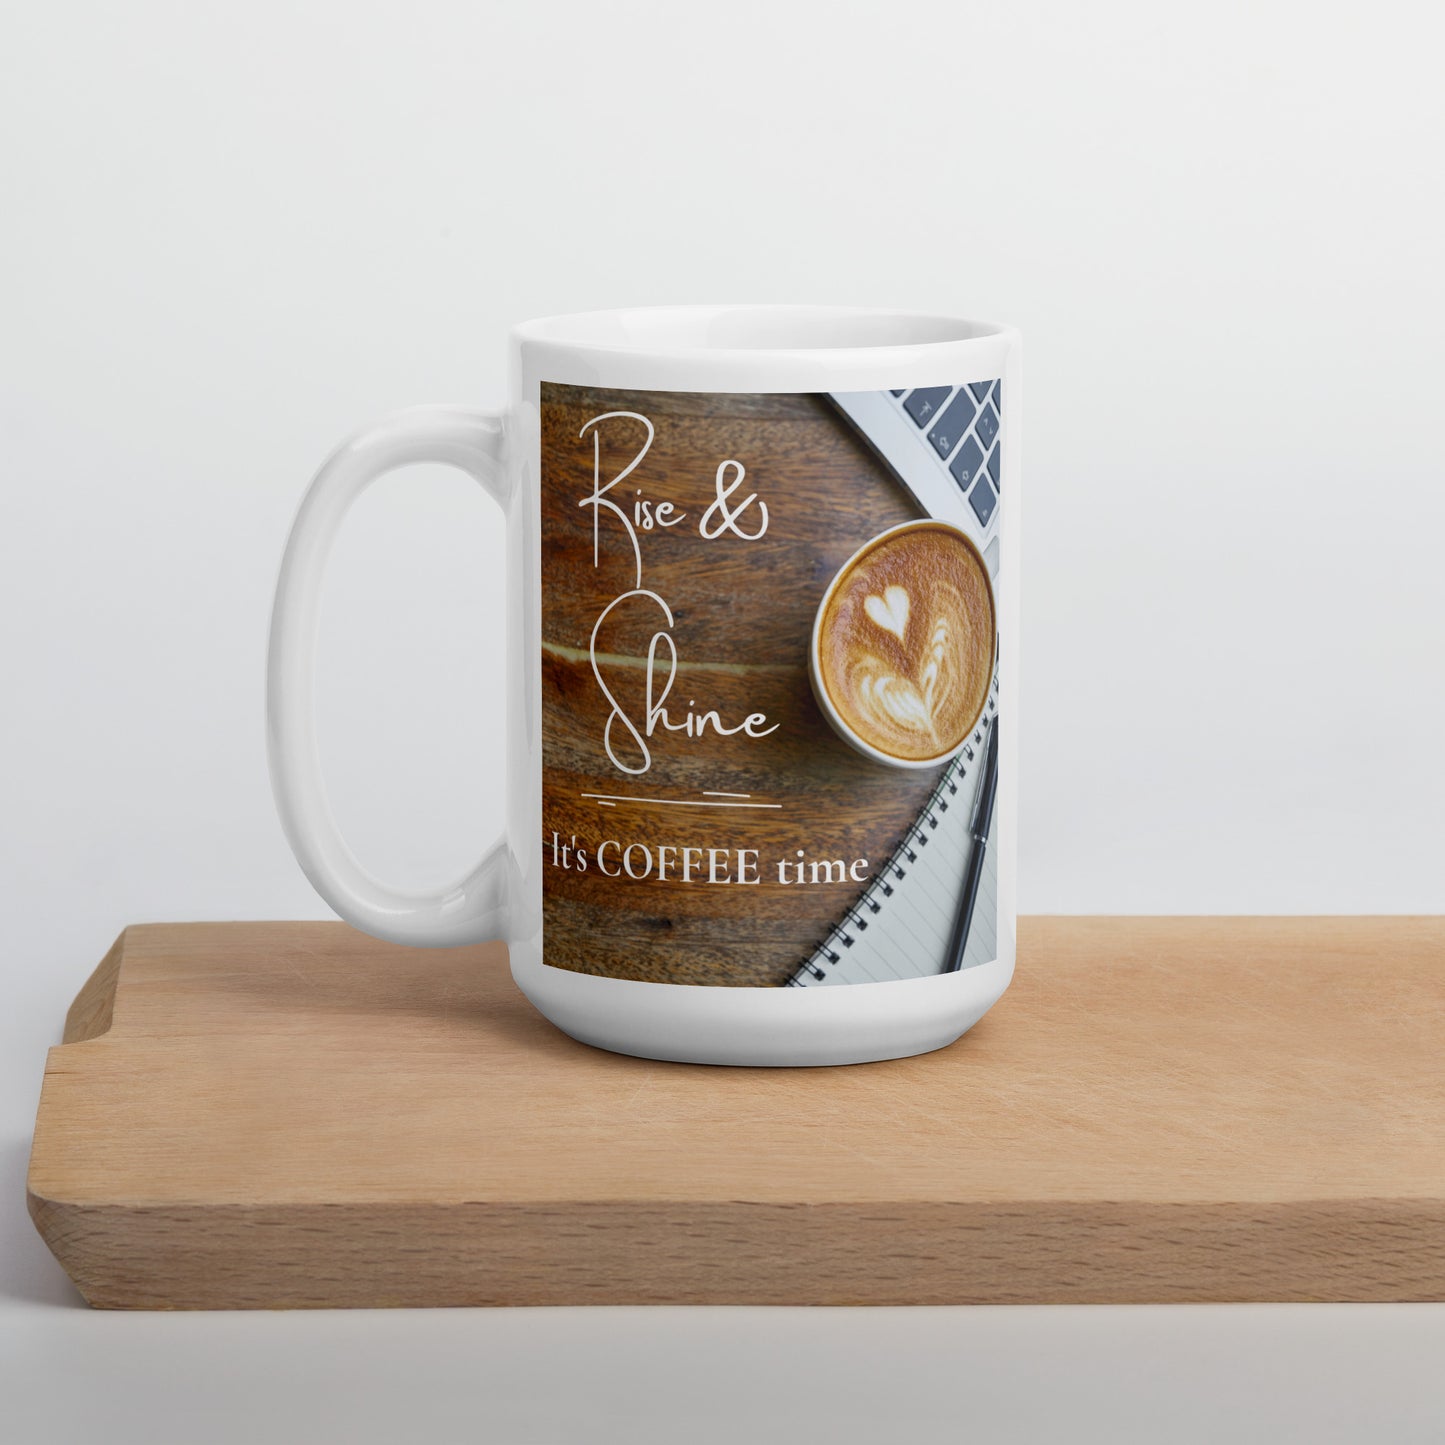 Rise & Shine it's Coffee Time White glossy mug